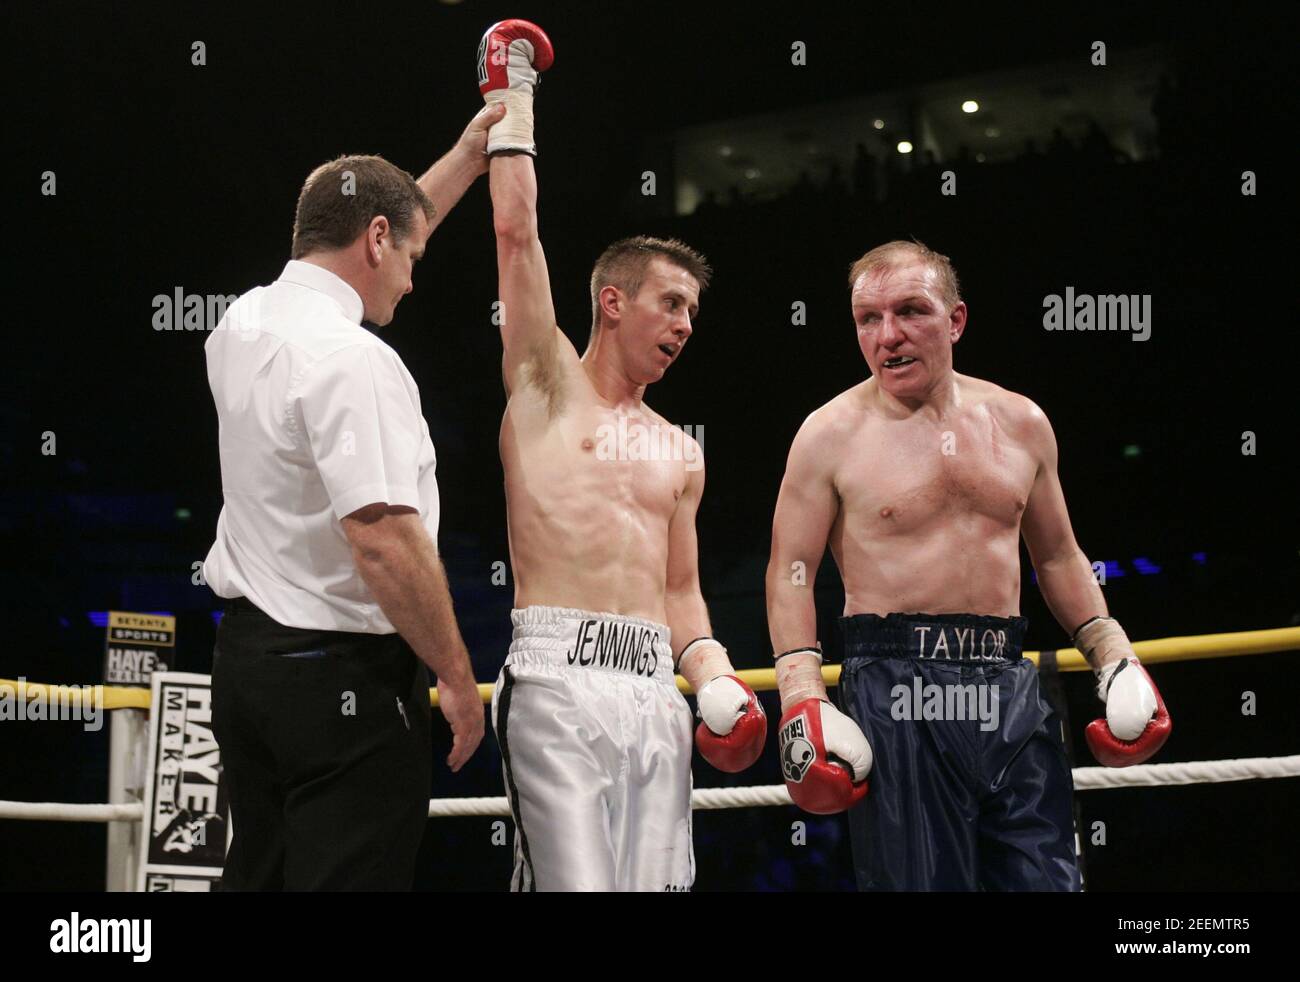 Boxing - Lee Jennings v Karl Taylor - Welterweight Fight - Echo Arena,  Liverpool - 28/3/09 Lee Jennings (C) celebrates victory Mandatory Credit:  Action Images / Alex Morton Stock Photo - Alamy